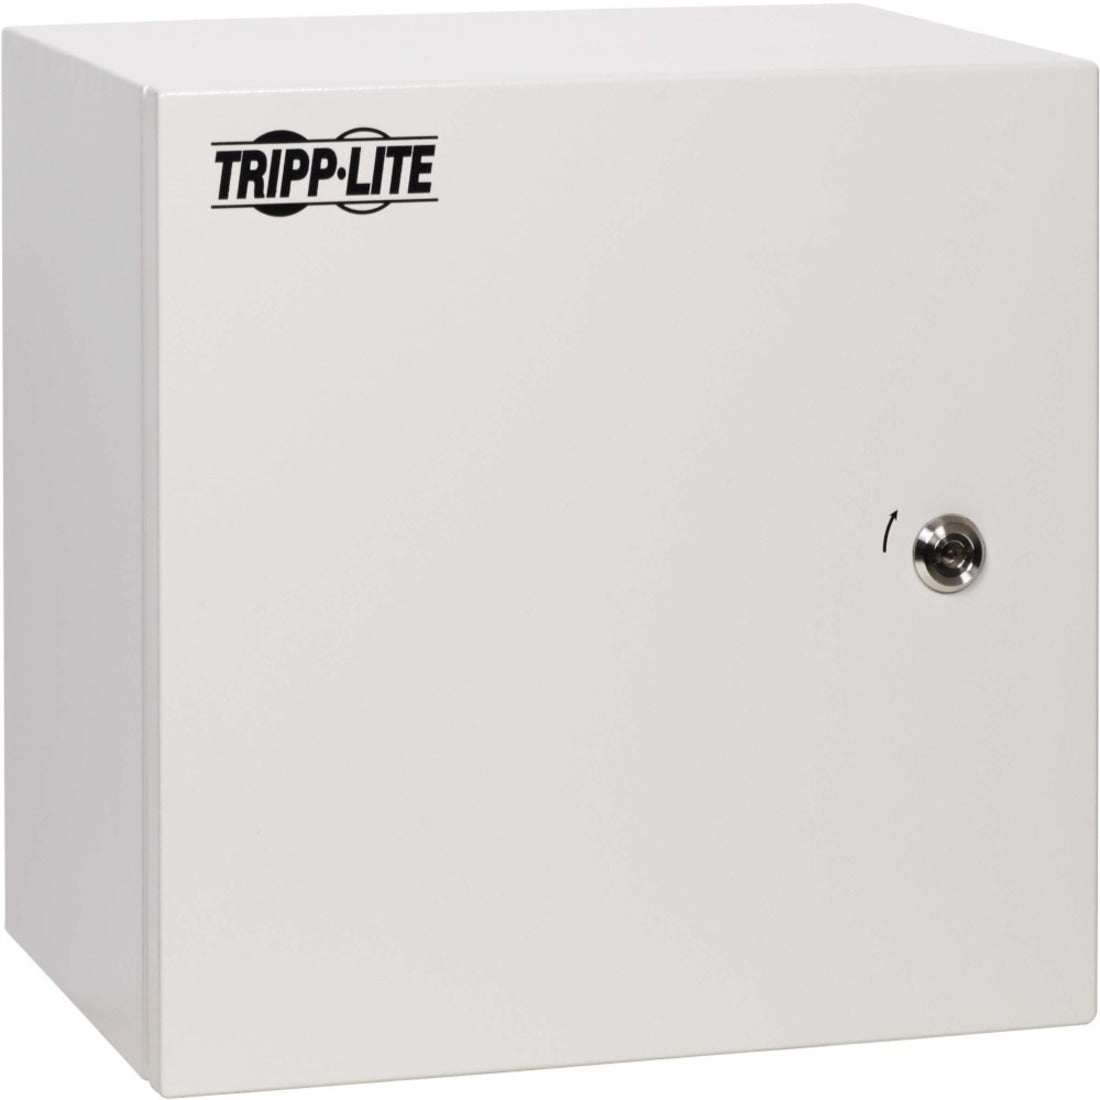 Tripp Lite SRIN4121210 Industrial Locking Metal Outdoor Enclosure, NEMA 4, 12x12x10in, Heavy Duty, Water Resistant